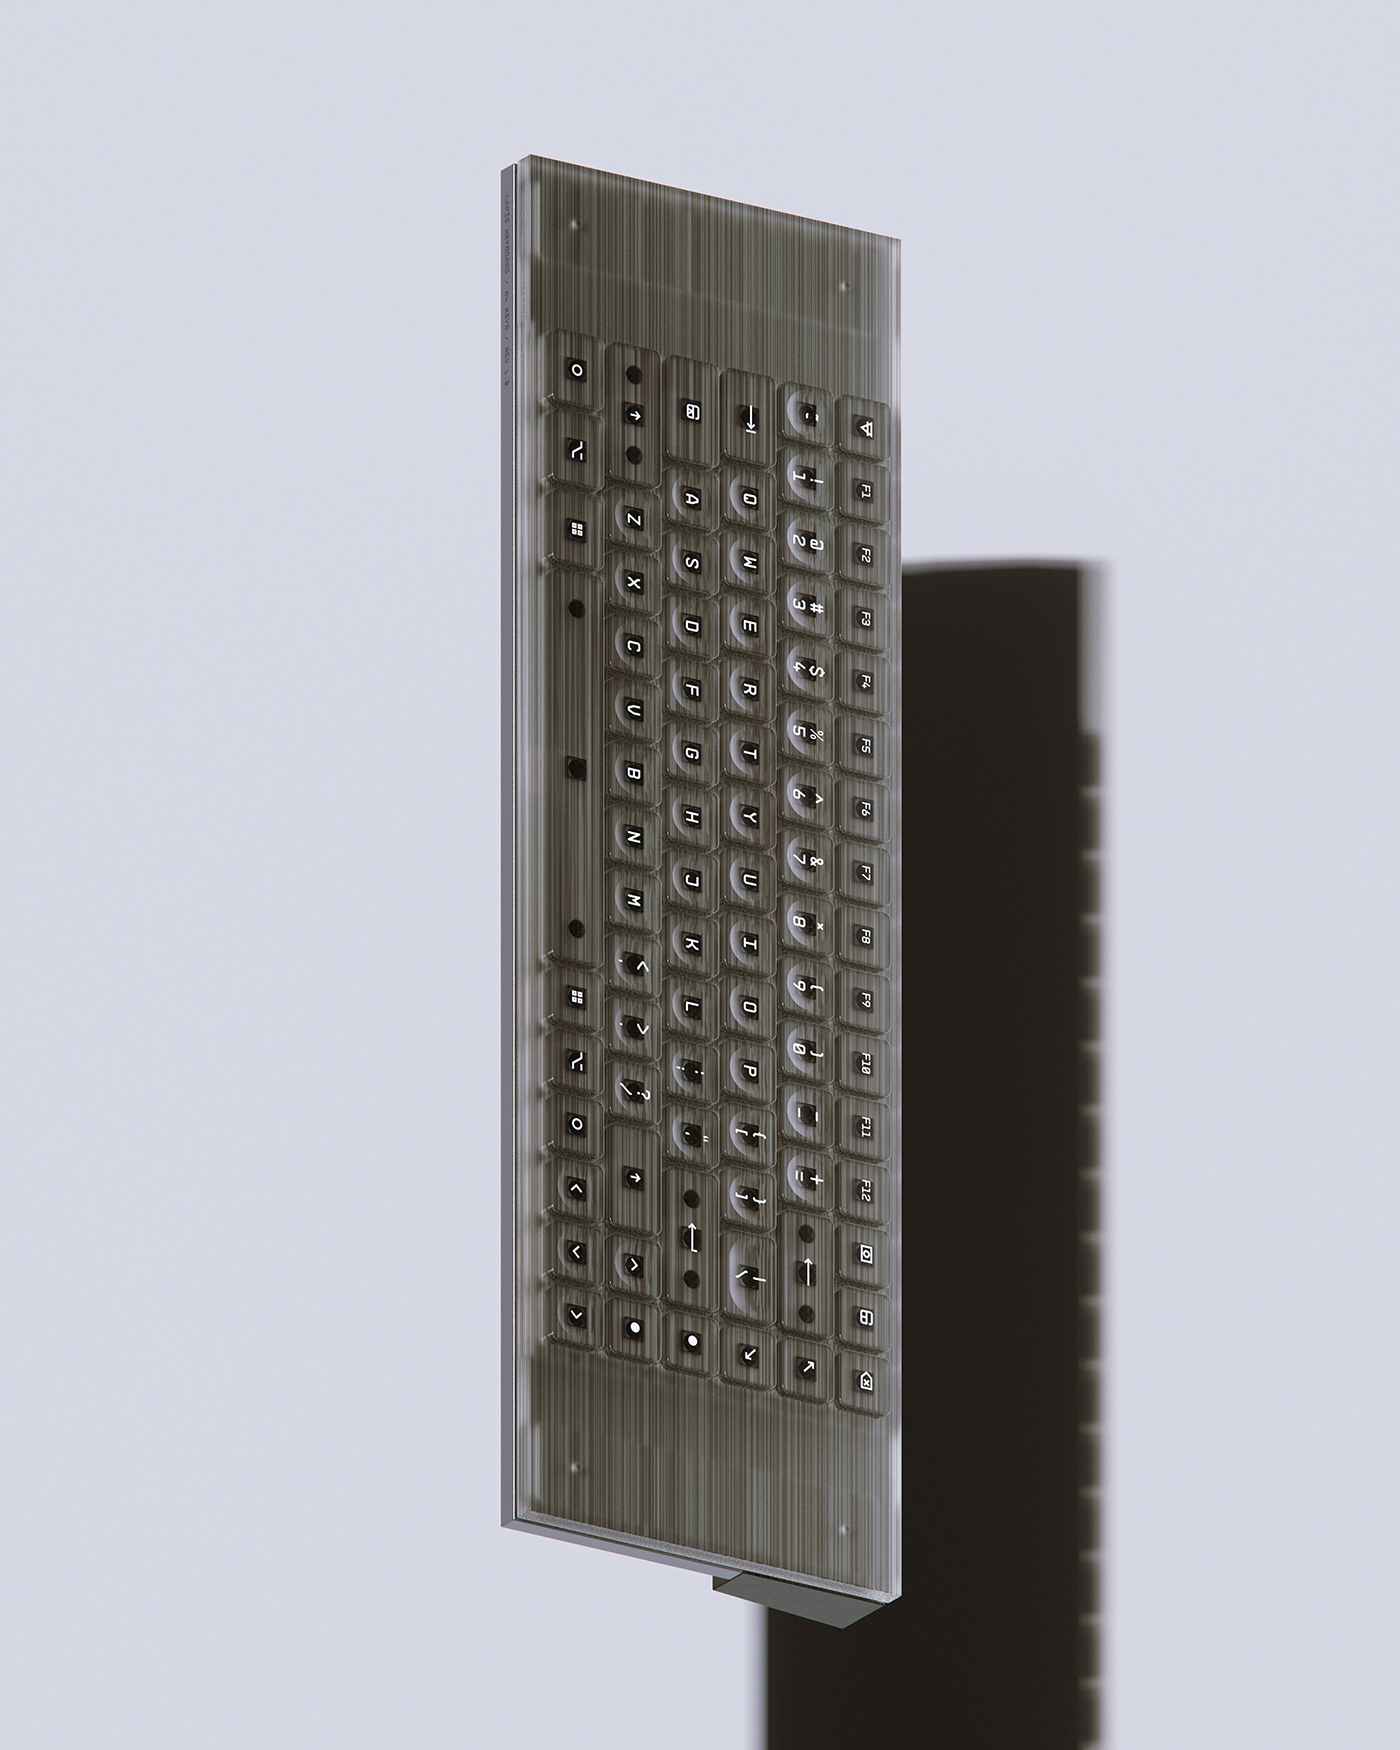 keyboard materials rendering industrial design  product